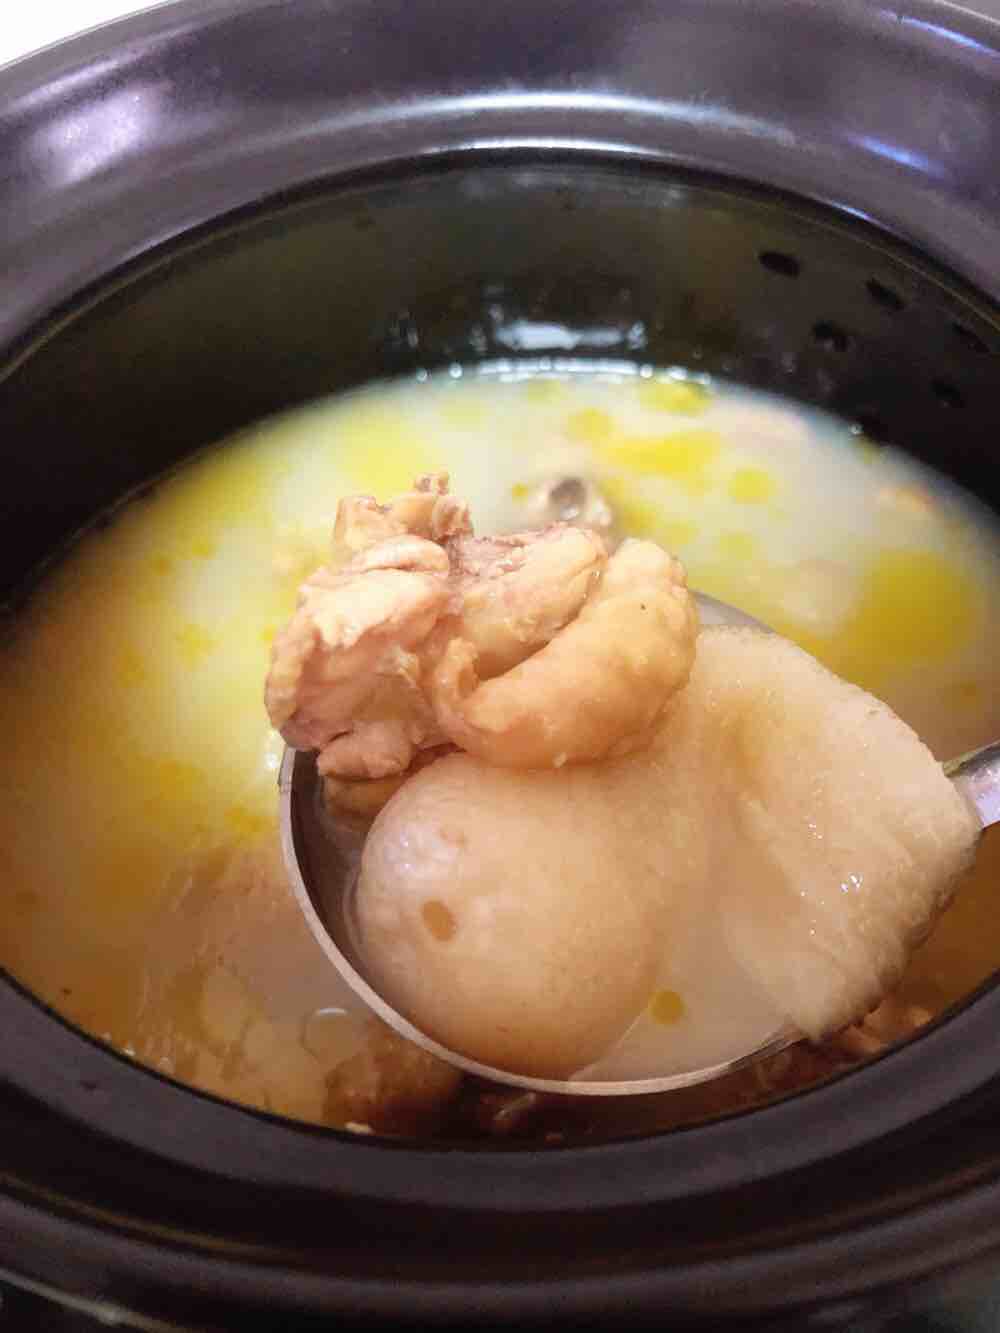 Bamboo Sun Chicken Soup recipe